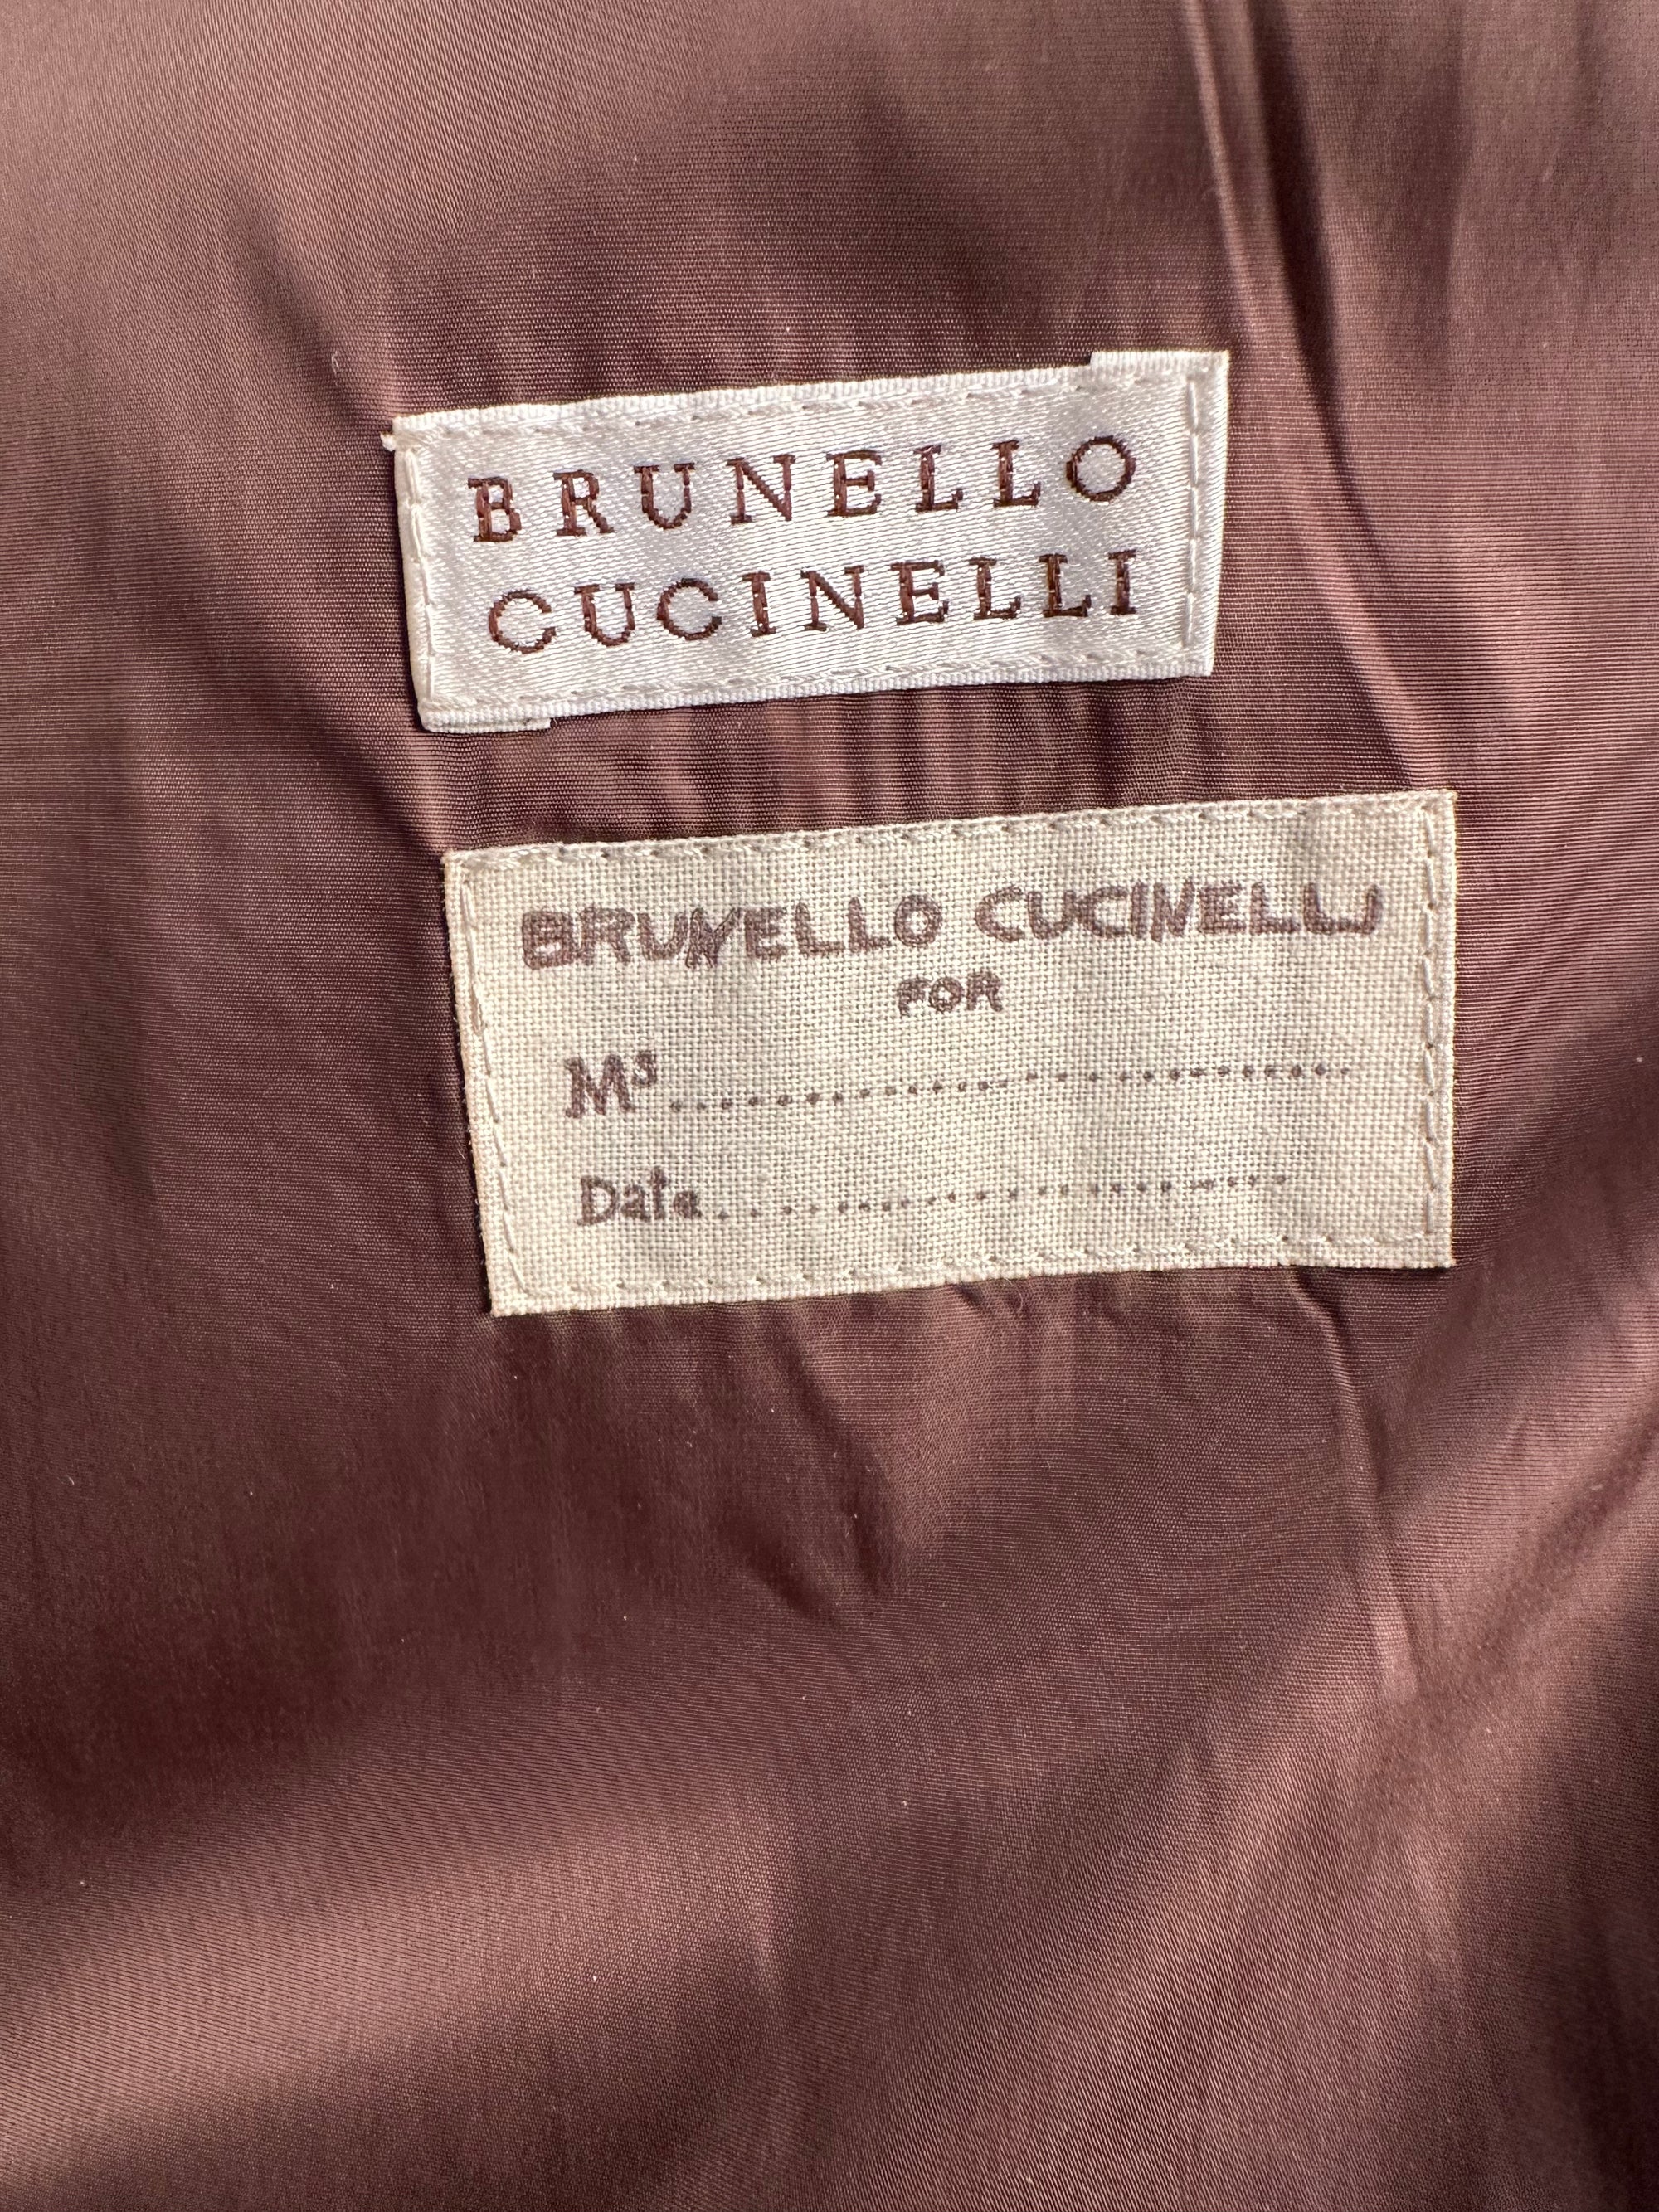 Brunello Cucinelli jacket with cashmere